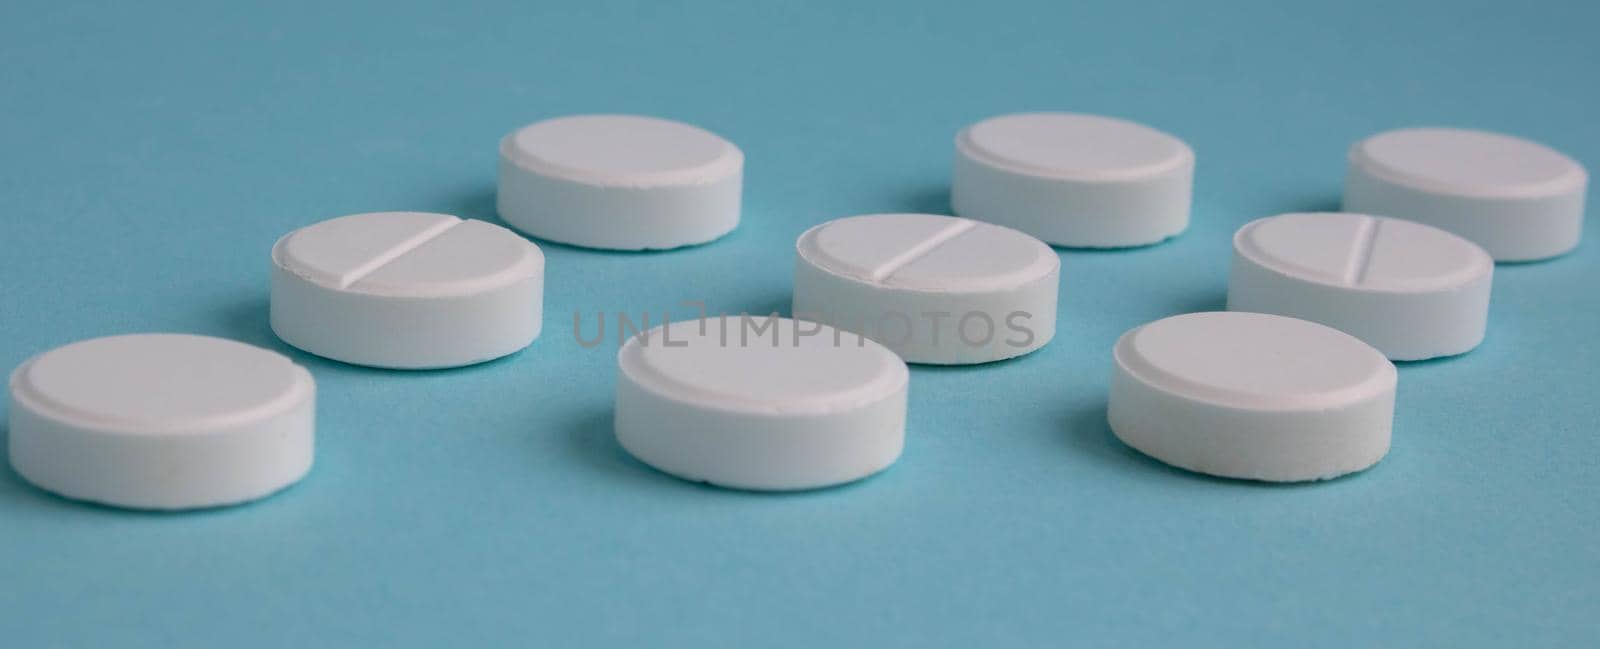 tablets from pharmaceuticals antibiotics medicine tablets antibacterial tablets.